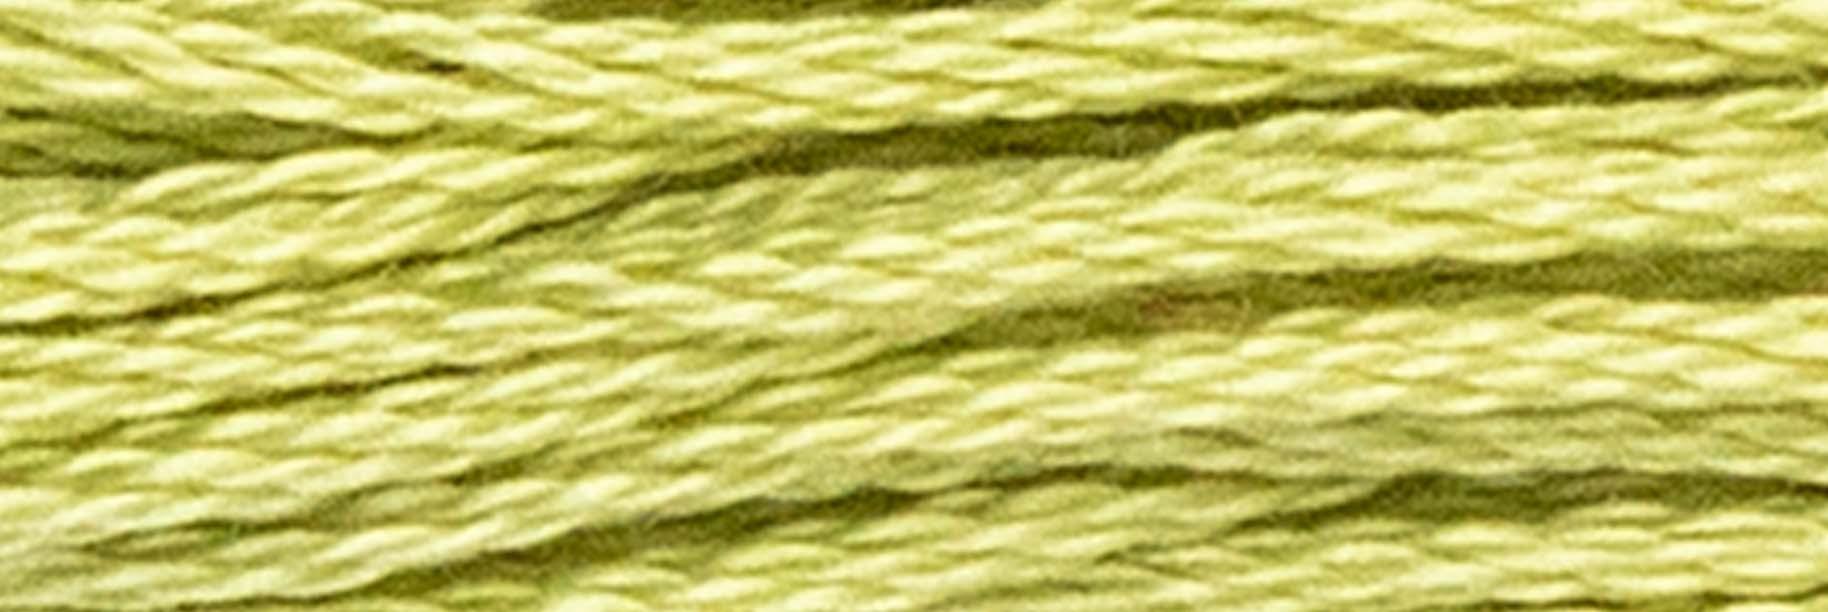 Stranded Cotton Luca-S - 259 / DMC 3348 / Anchor 264 - Luca-S Stranded Cotton